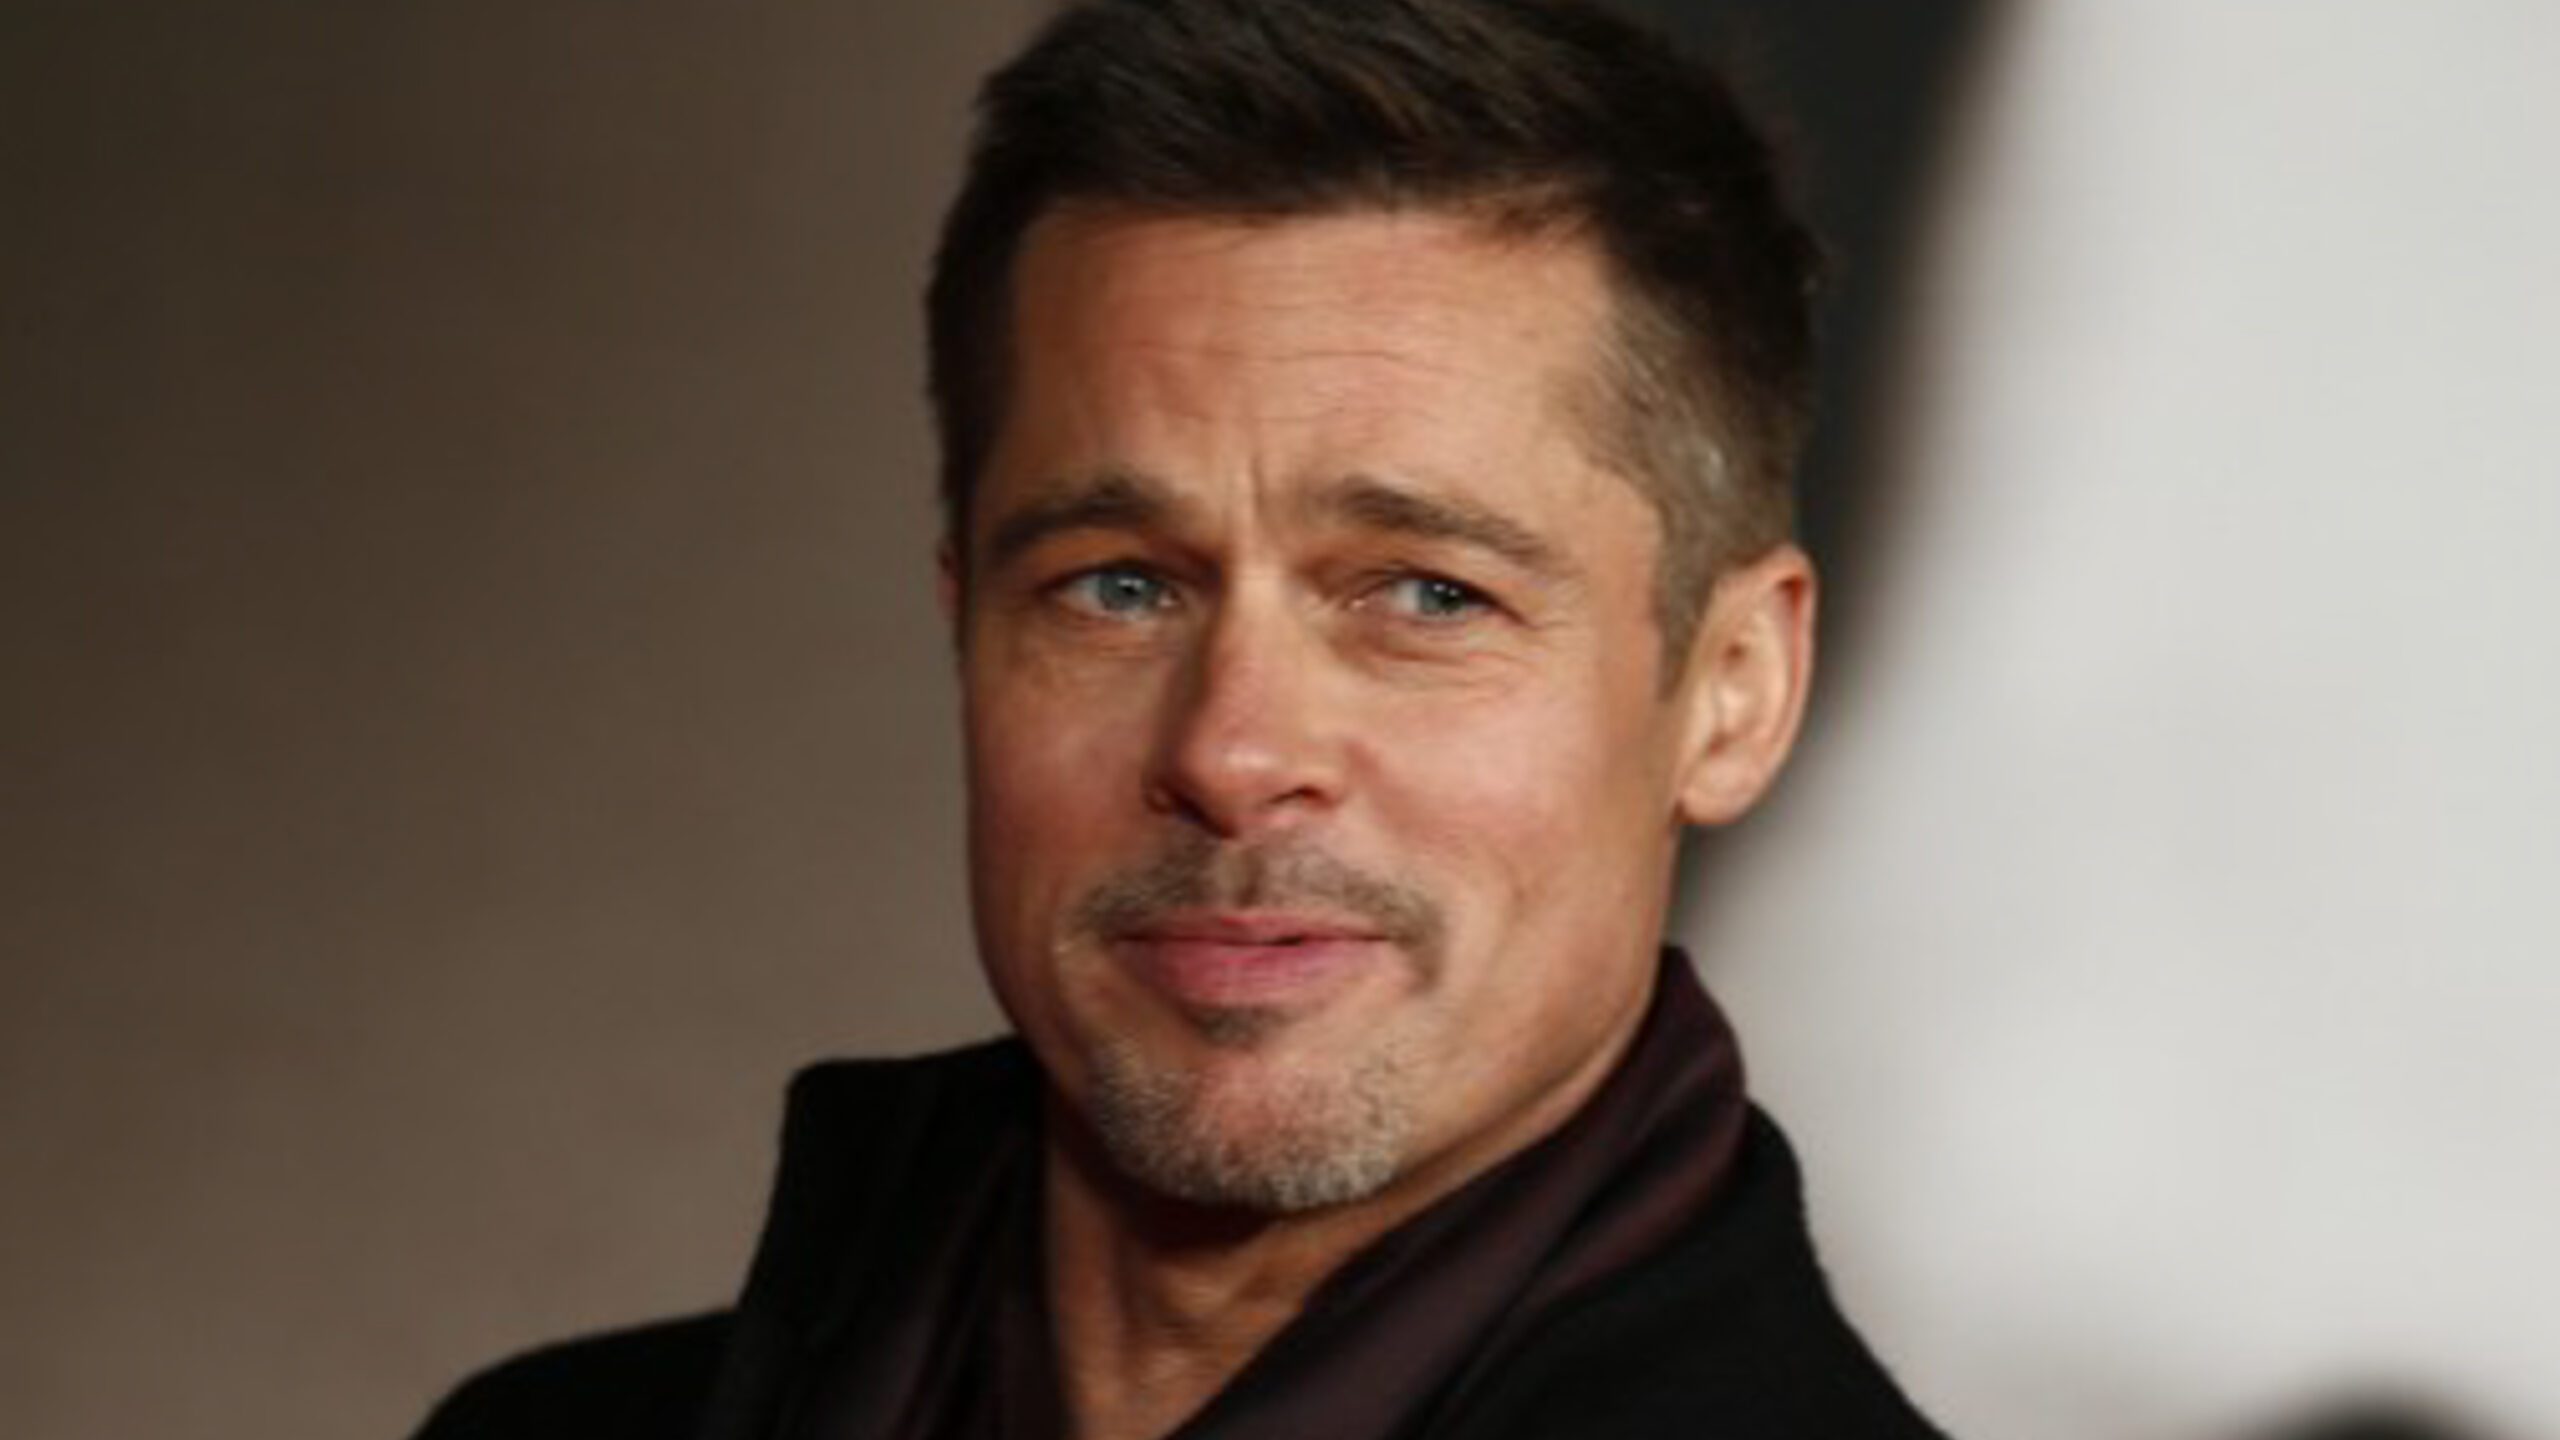 FBI clears Brad Pitt over abuse claim